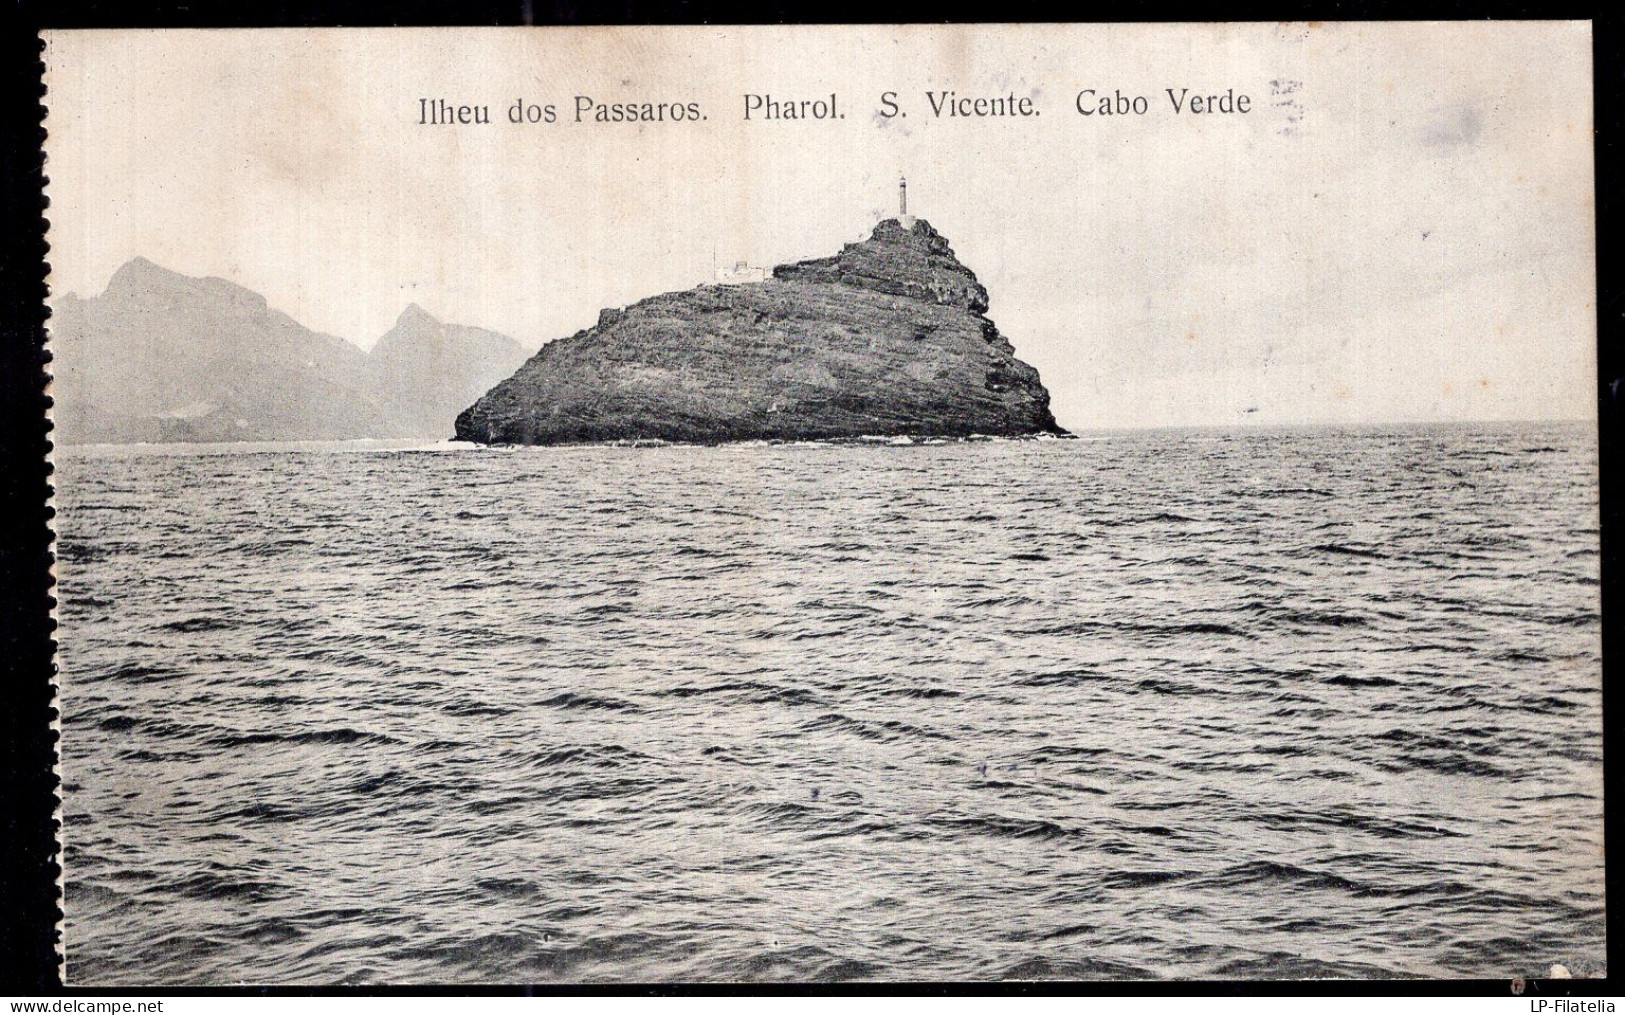 Cabo Verde - Circa 1920 - St. Vincent - Ilheu Dos Passaros - Pharol - Cap Verde